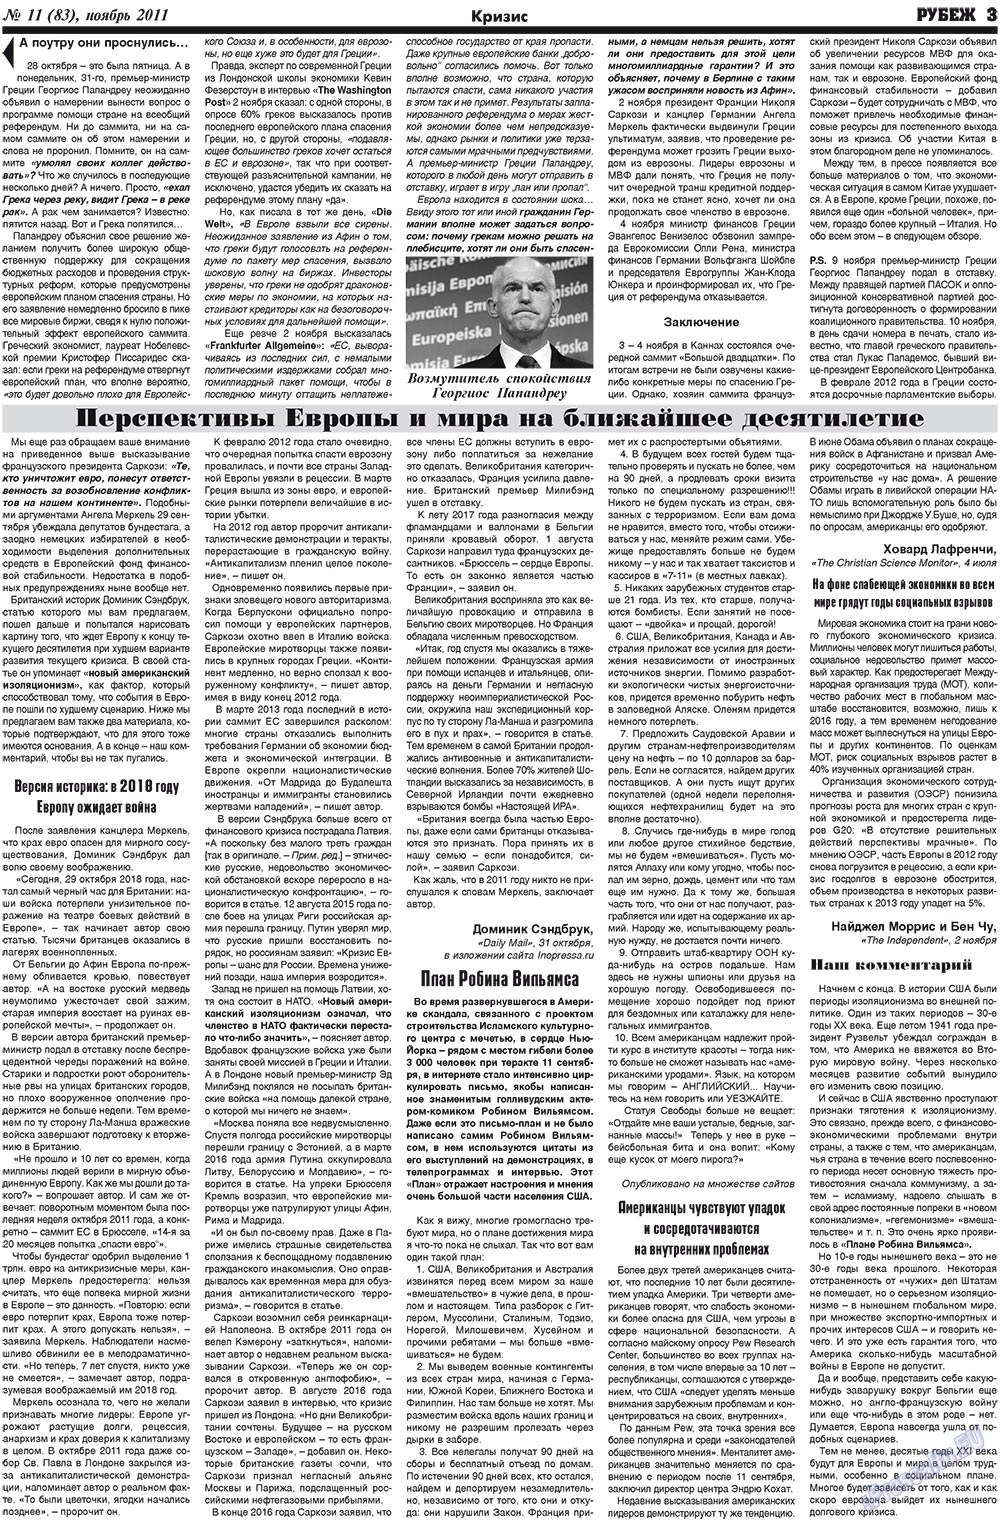 Рубеж, газета. 2011 №11 стр.3